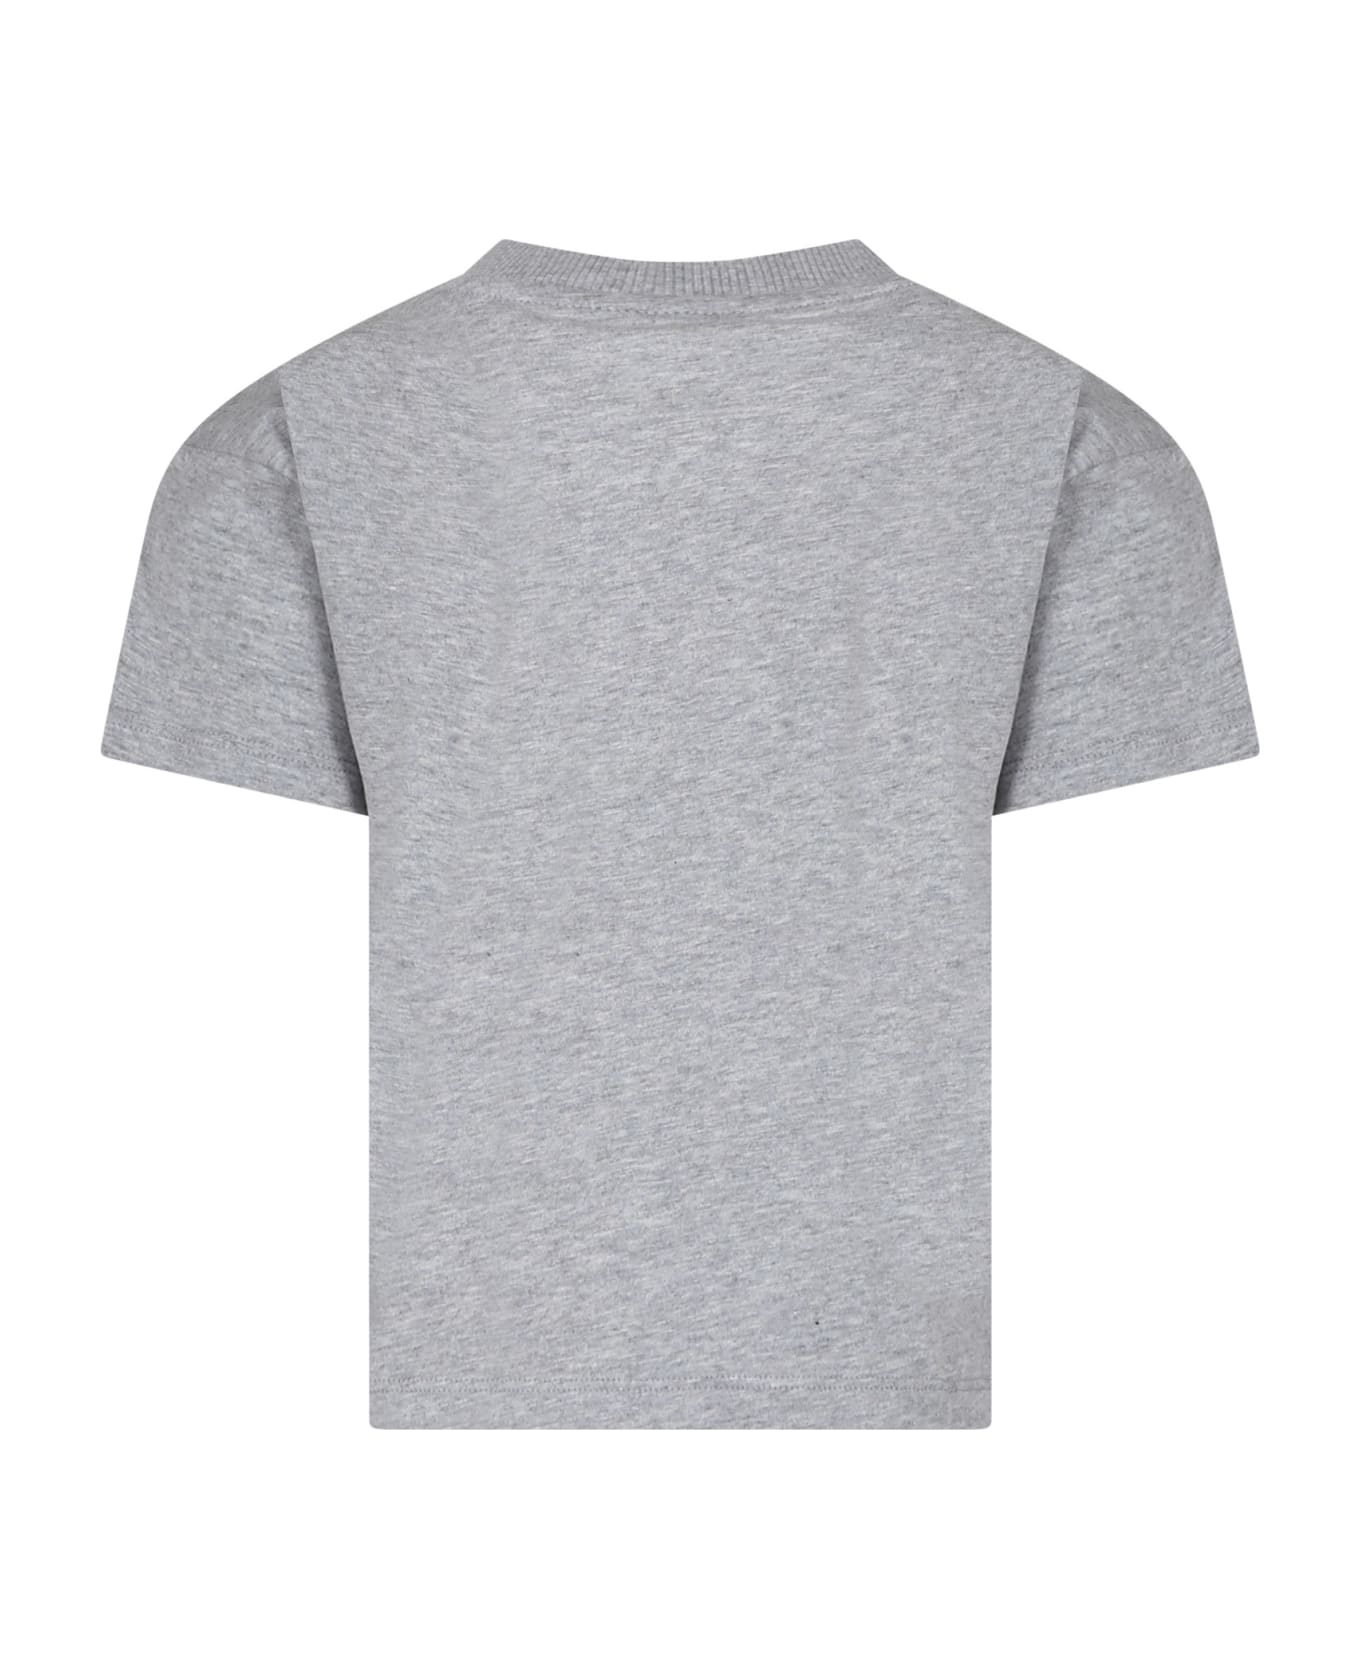 Mini Rodini Gray T-shirt For Kids With Owl - Grey